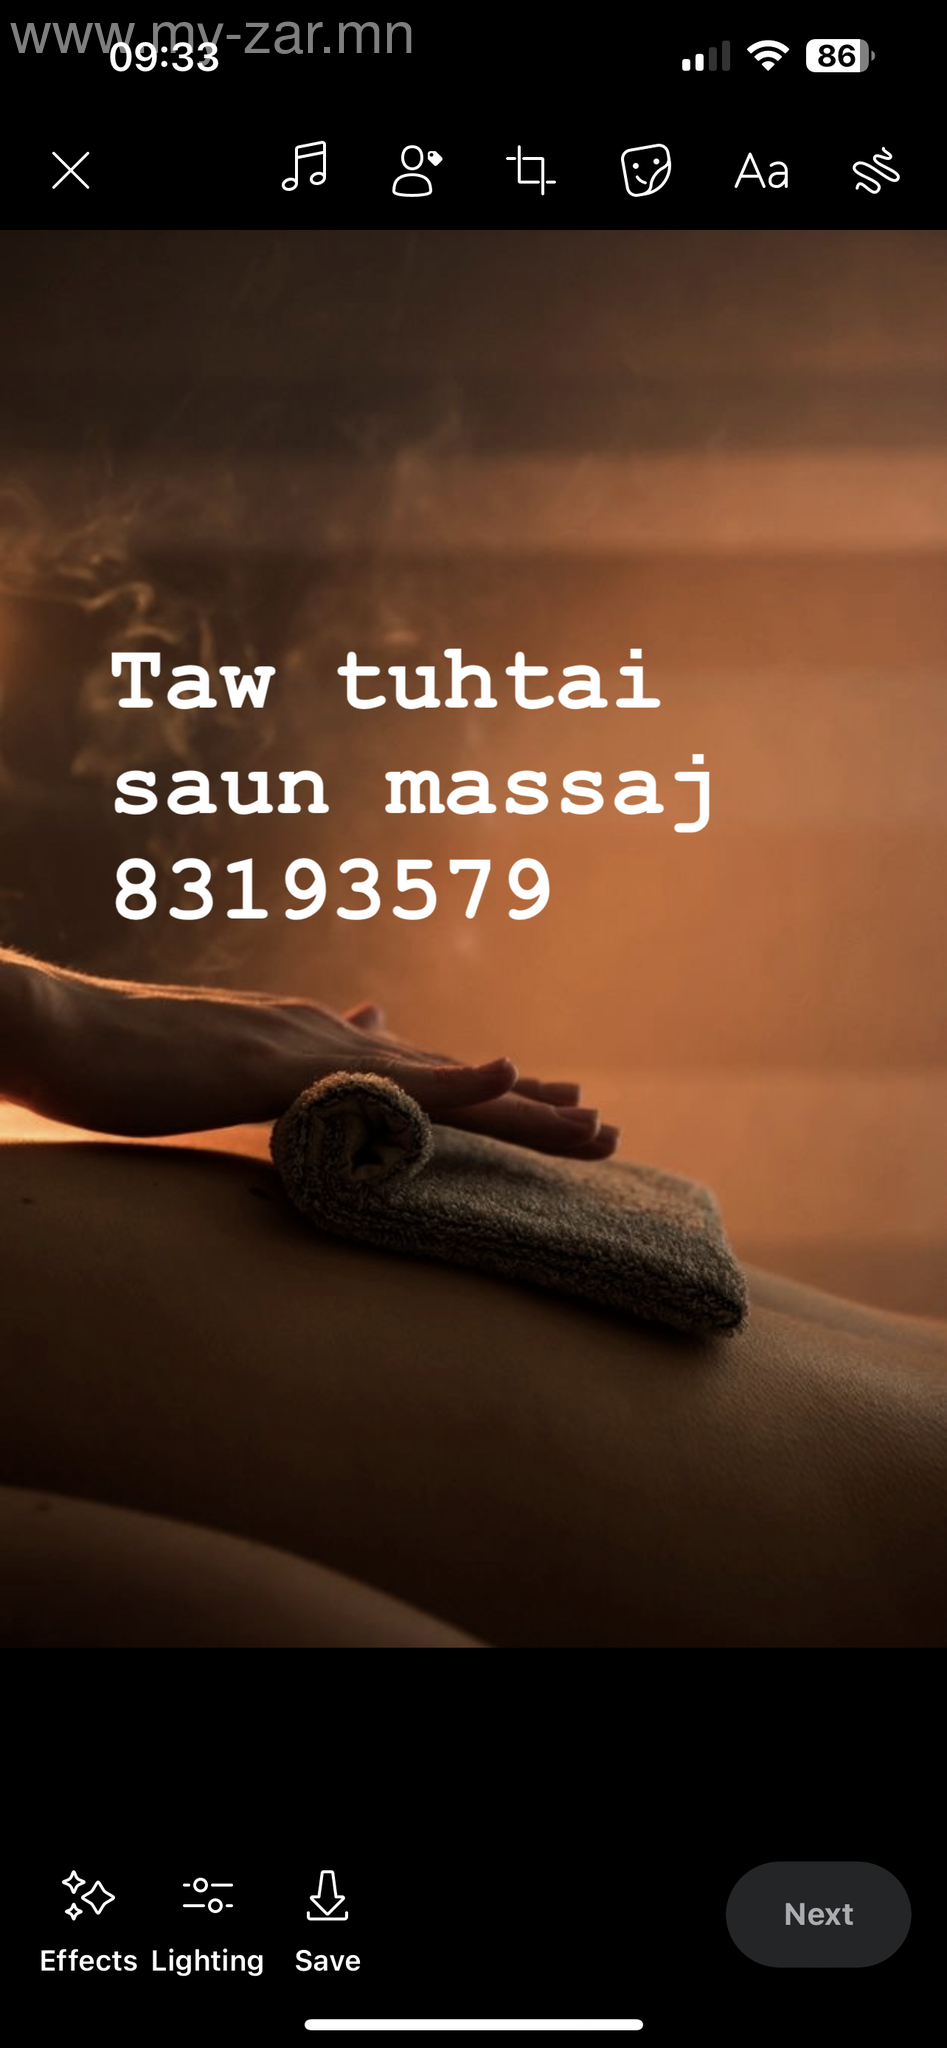 Mash tsewerhen taw tuhtai saun massaj ajillaj bn 83193579